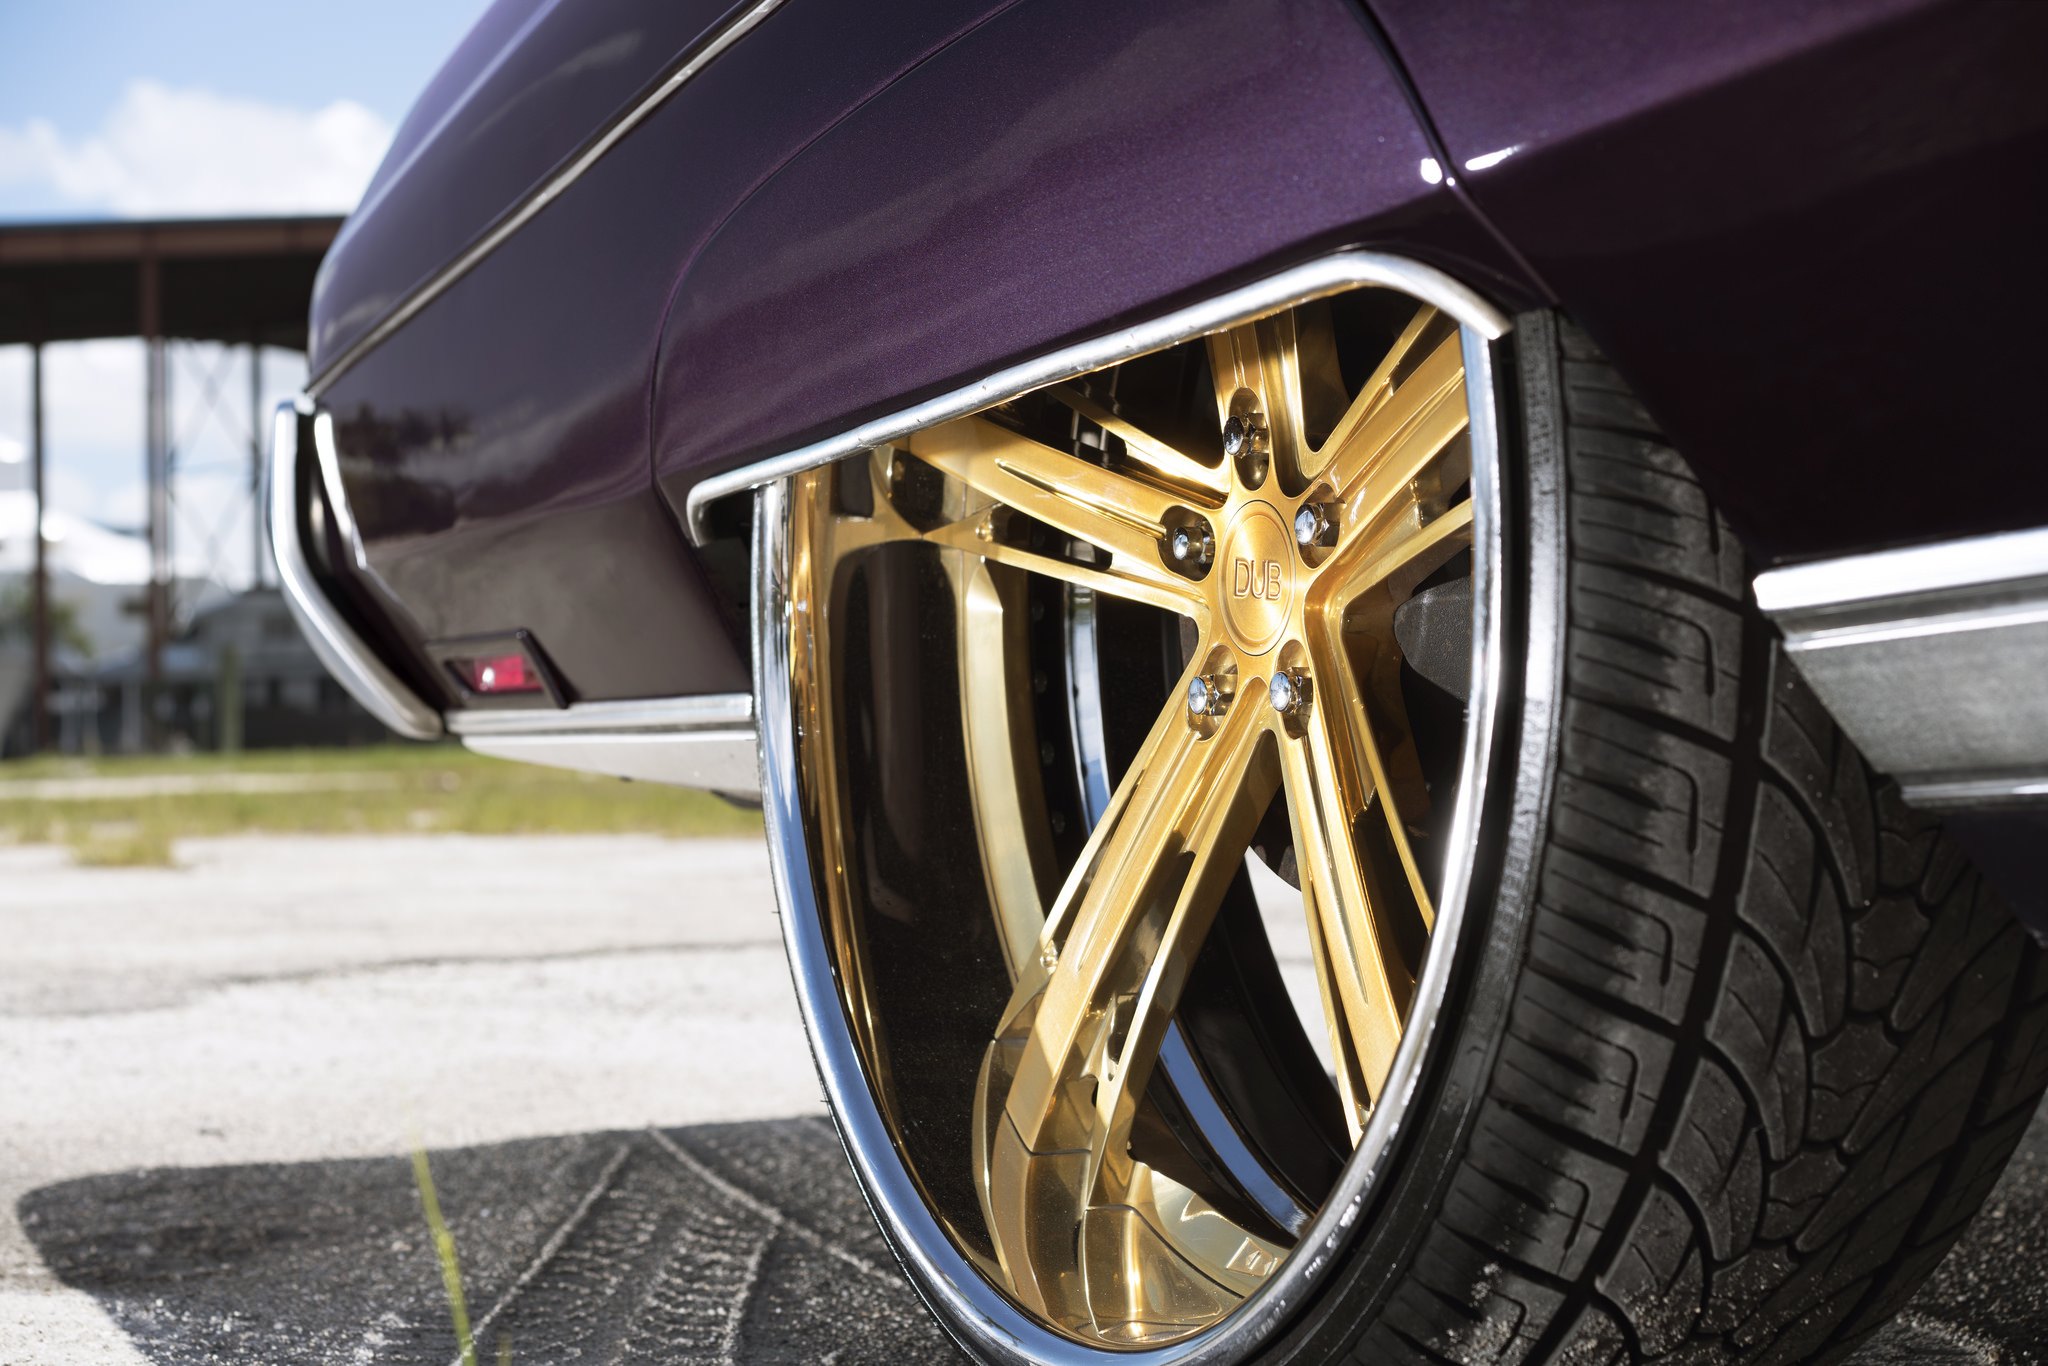 Gold DUB Rims on Chevy Impala - Photo by DUB